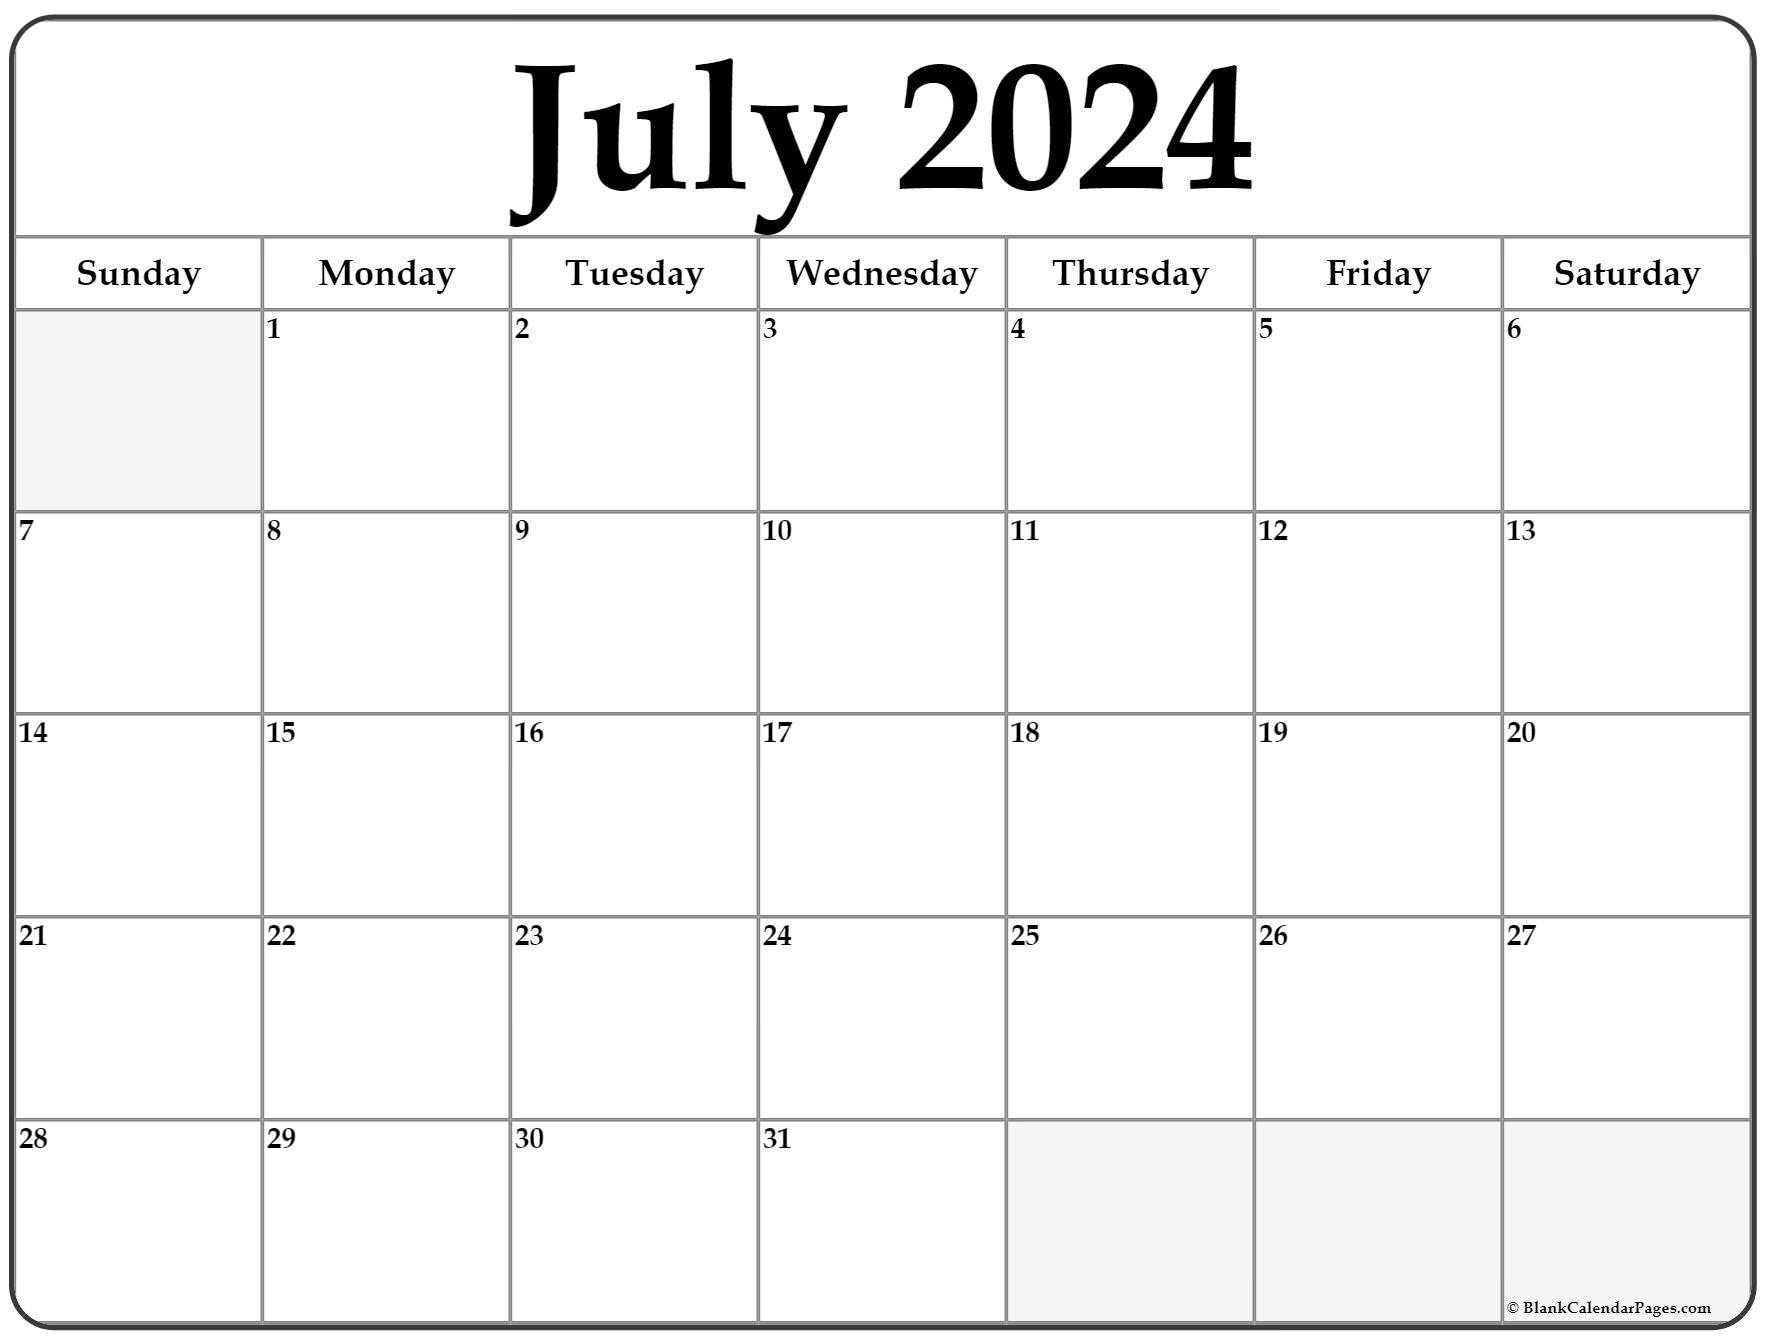 July 2024 Calendar | Free Printable Calendar for Printable Summer Calendar 2024 Free